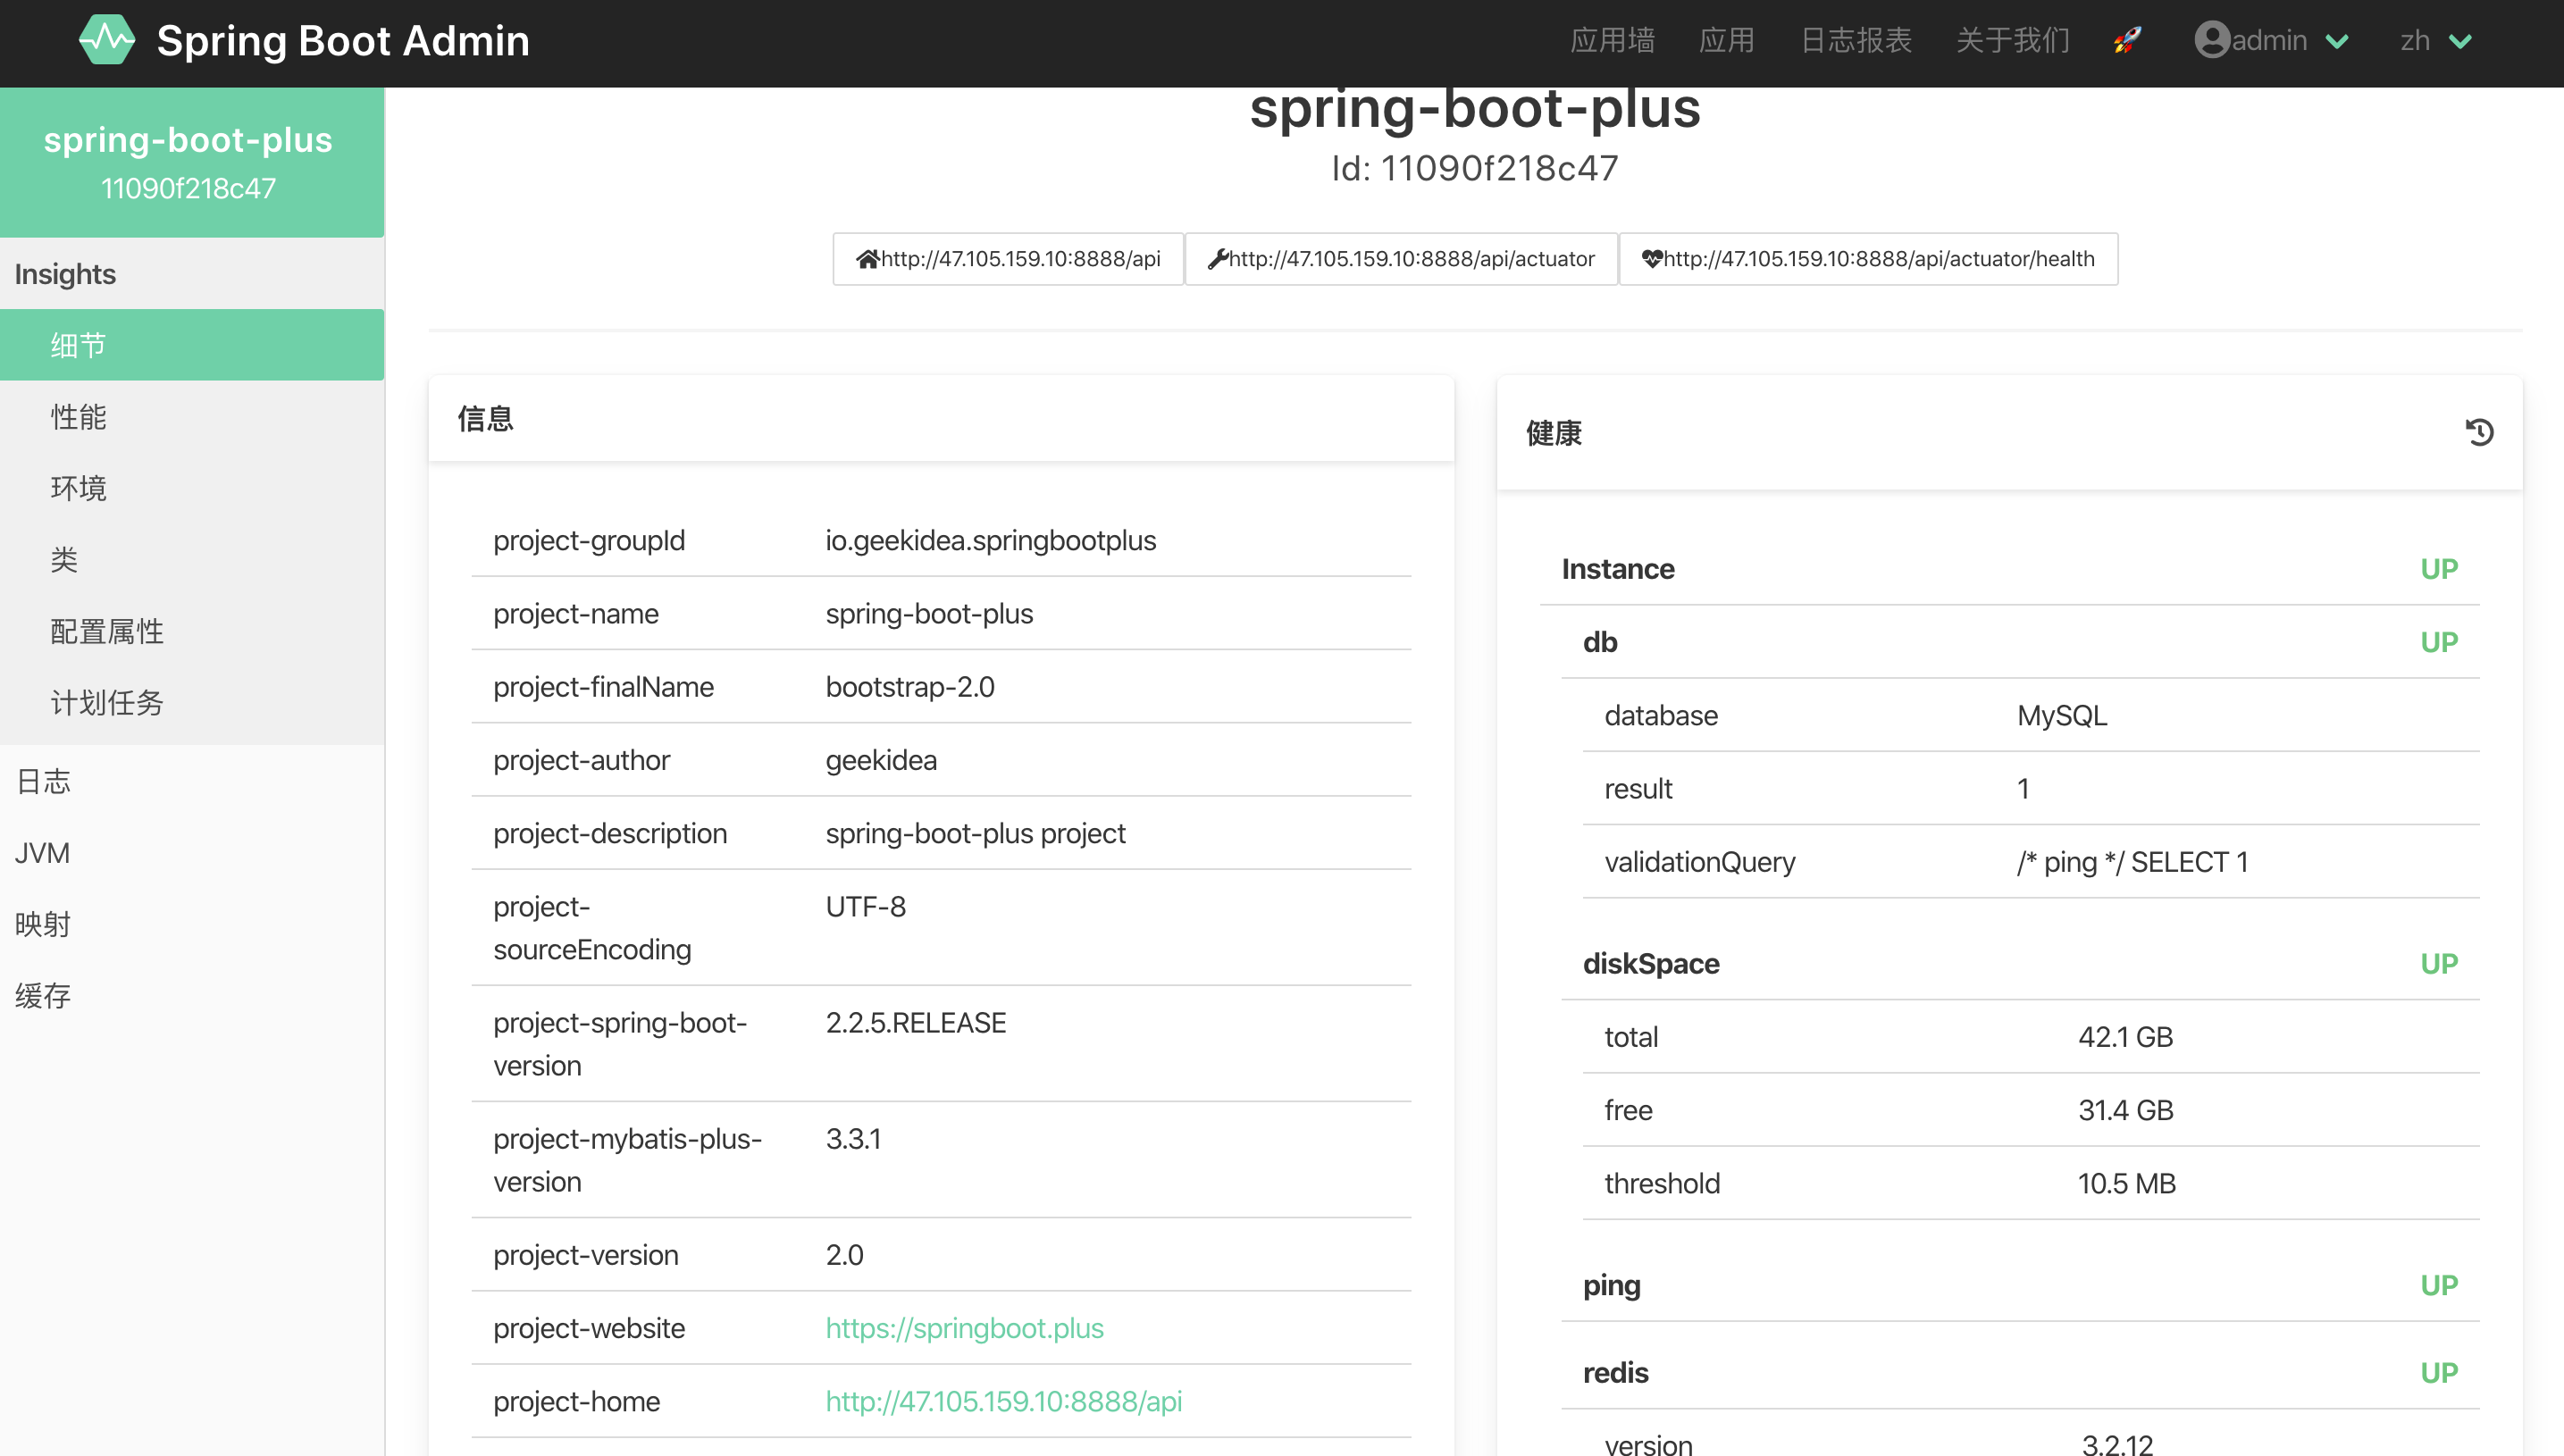 spring-boot-admin instances